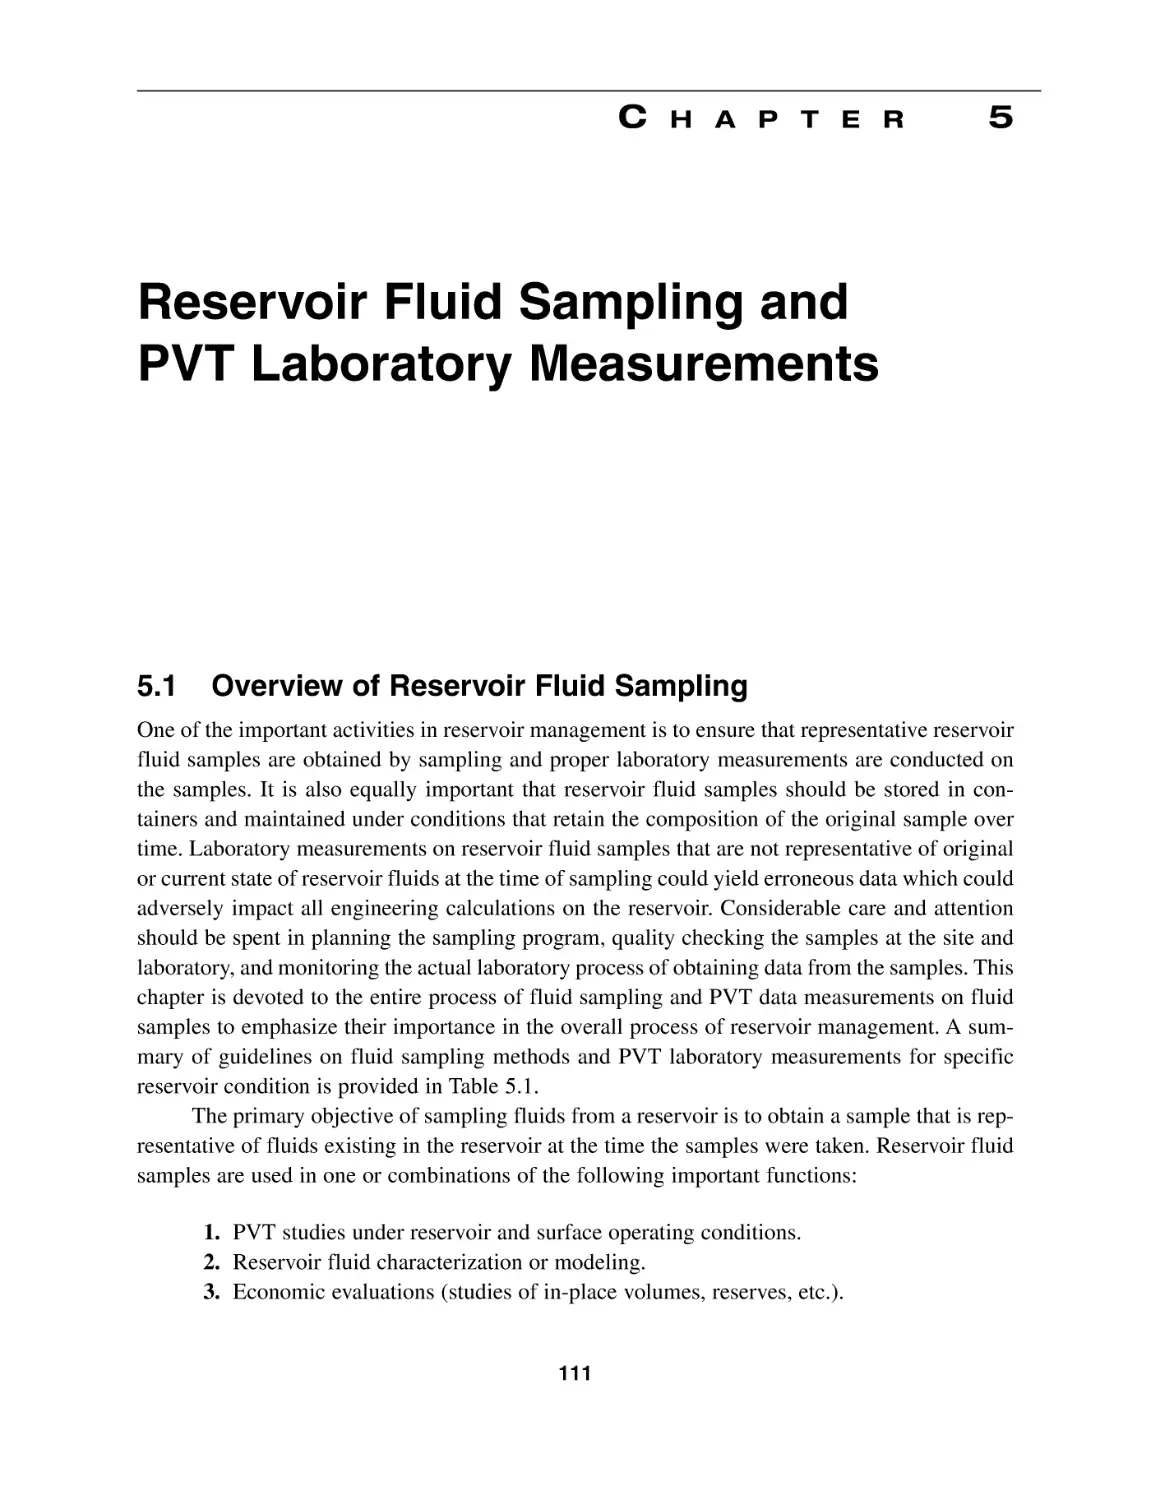 Chapter 5 Reservoir Fluid Sampling and PVT Laboratory MeasurementsChapter
5.1 Overview of Reservoir Fluid Sampling